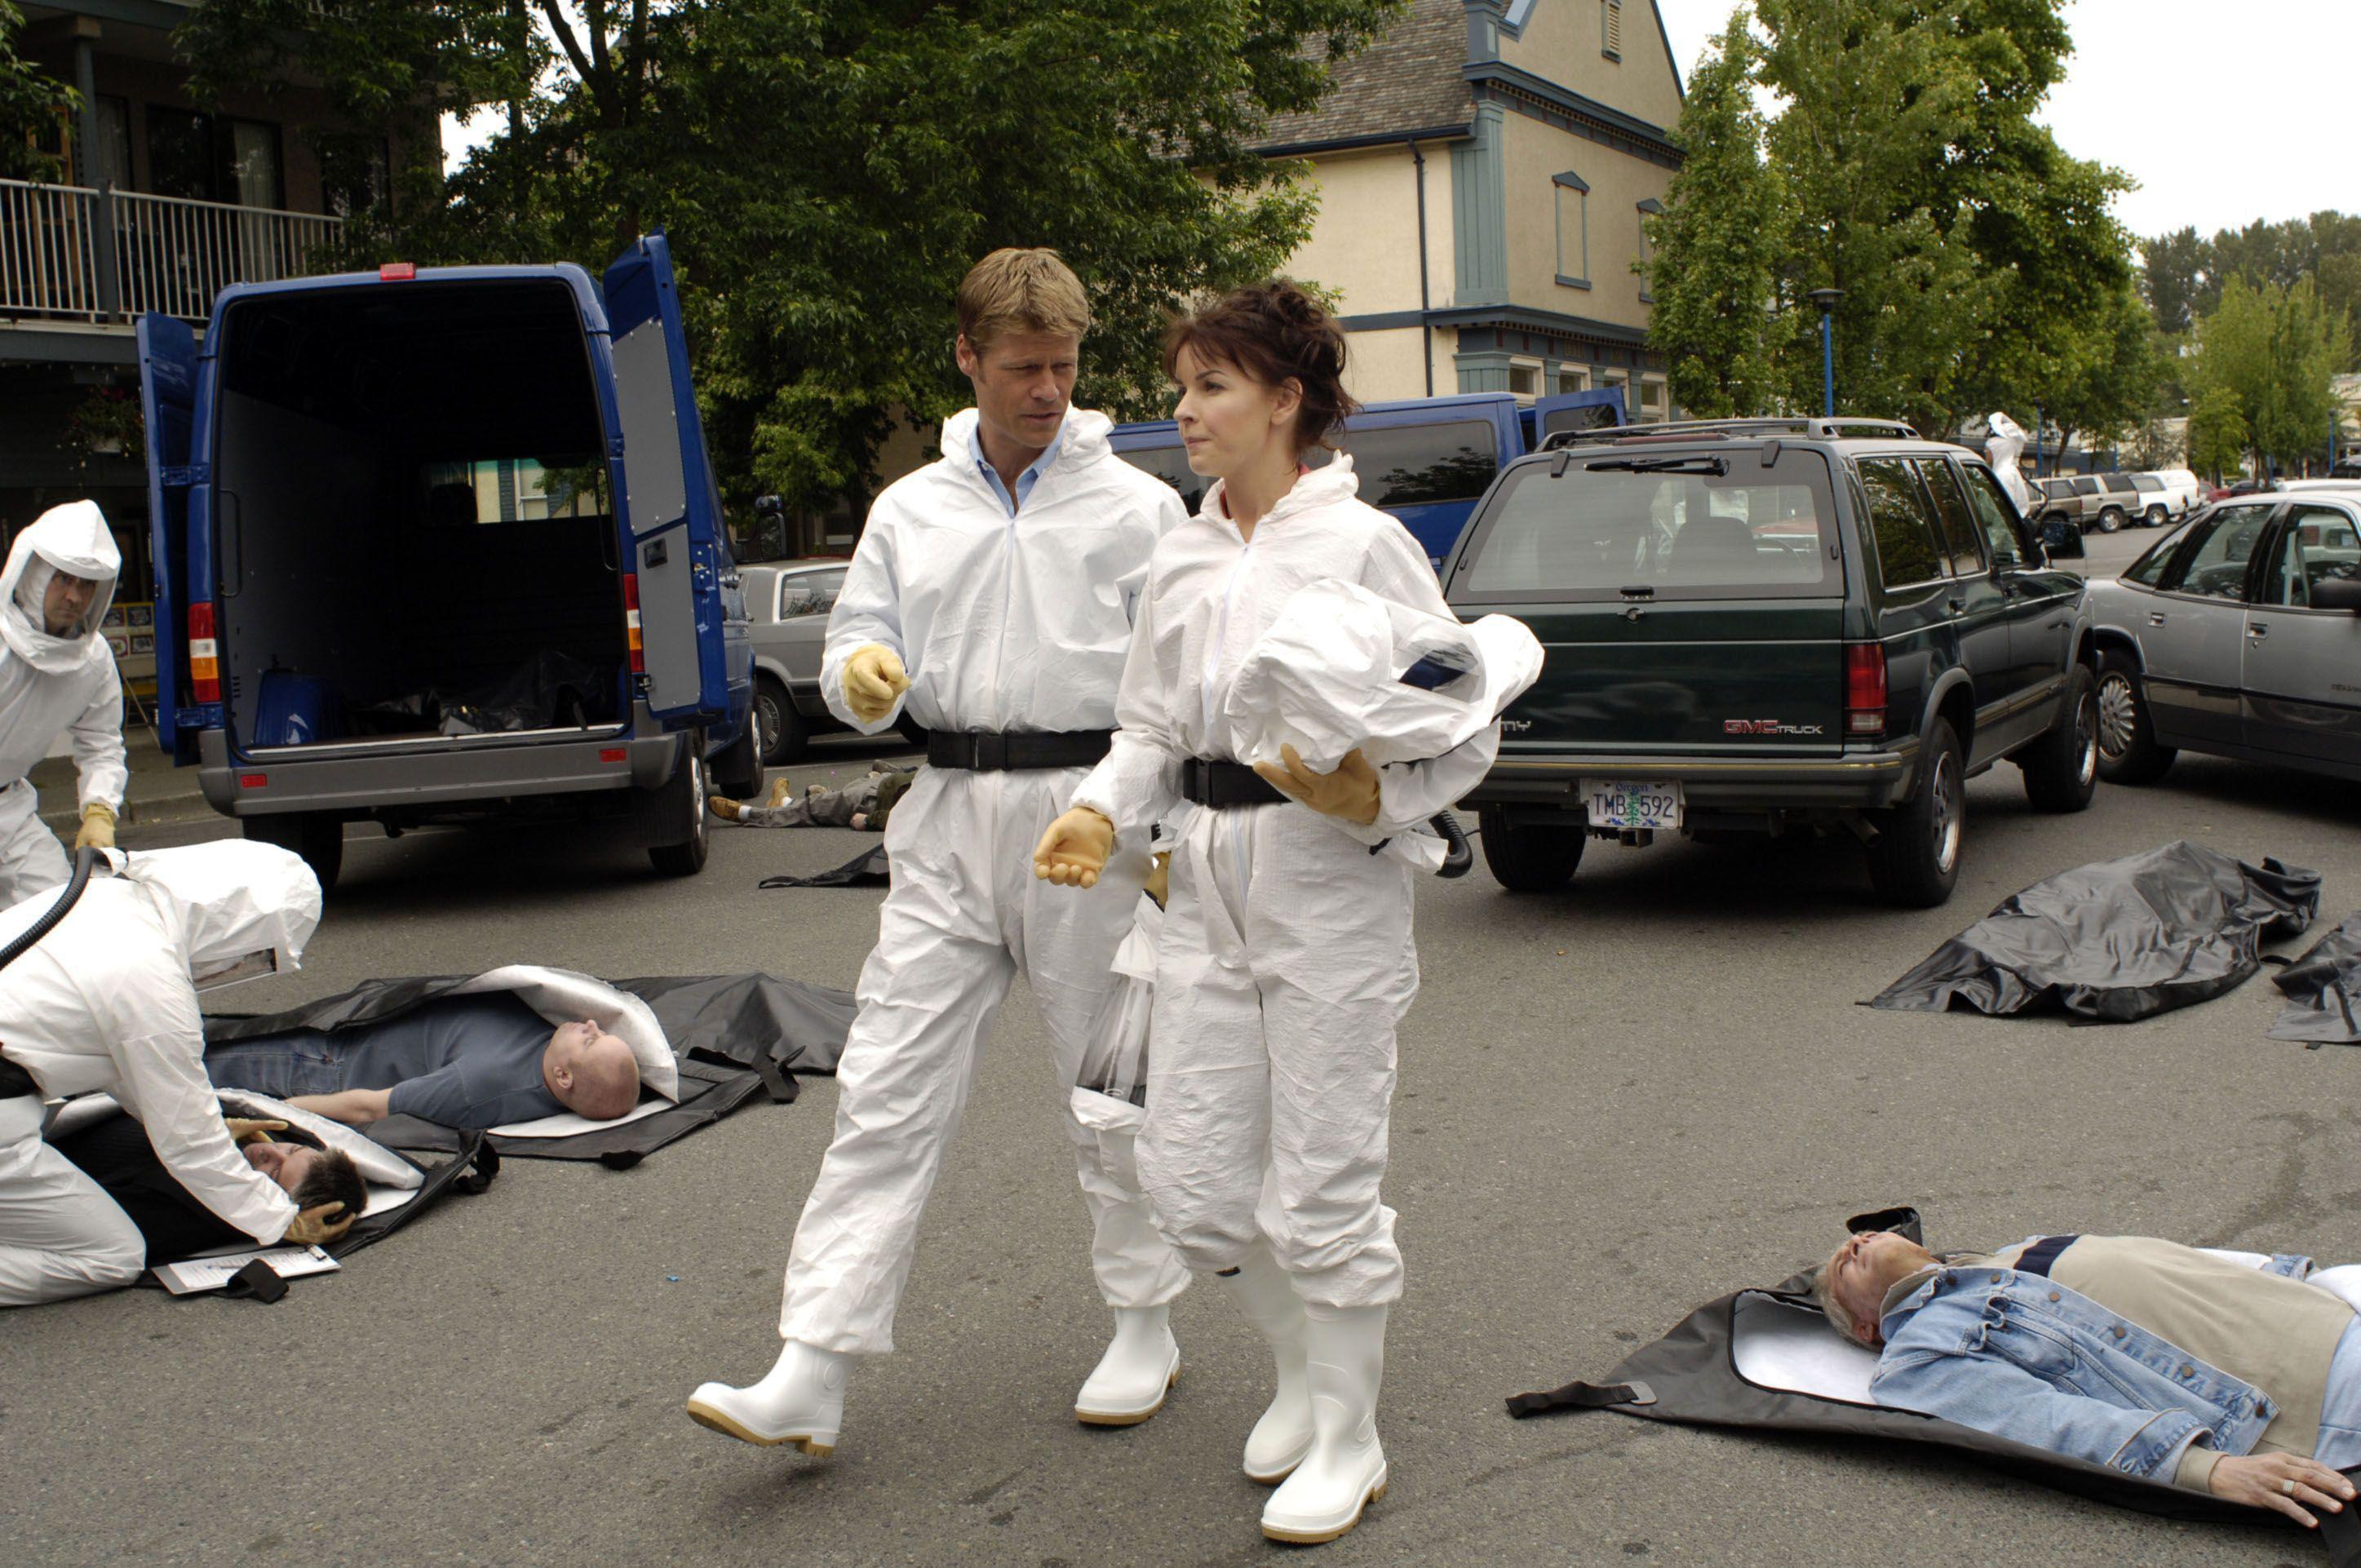 Tom Baldwin (Joel Gretsch) and Diana Skouris (Jacqueline Mckenzie) investigate a crime scene in The 4400.